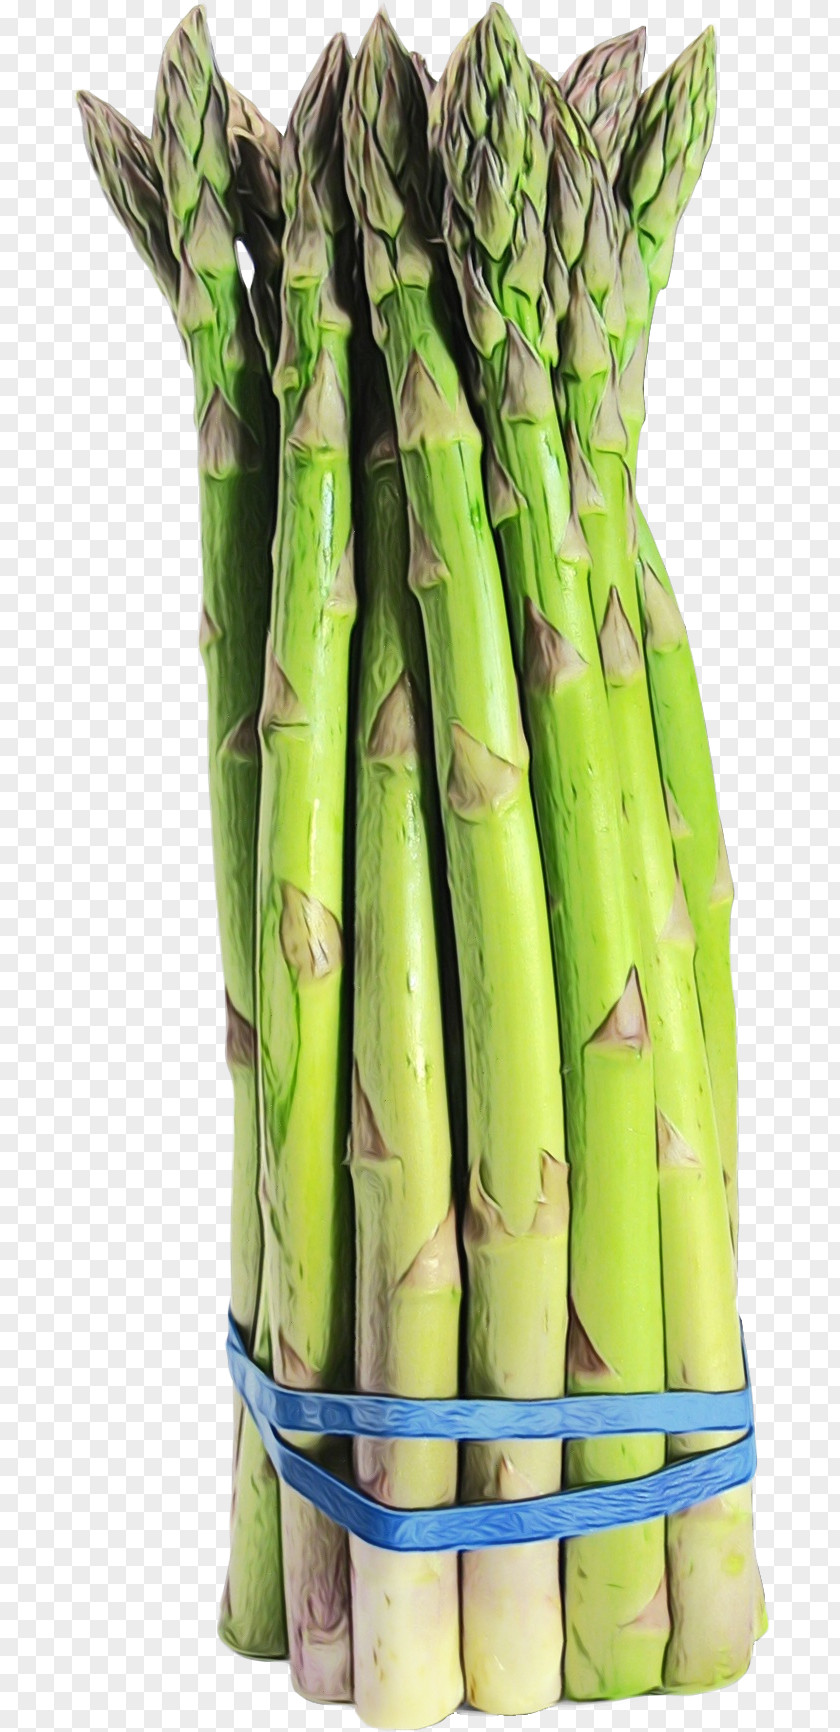 Plant Stem Bamboo Asparagus Vegetable Shoot Food PNG